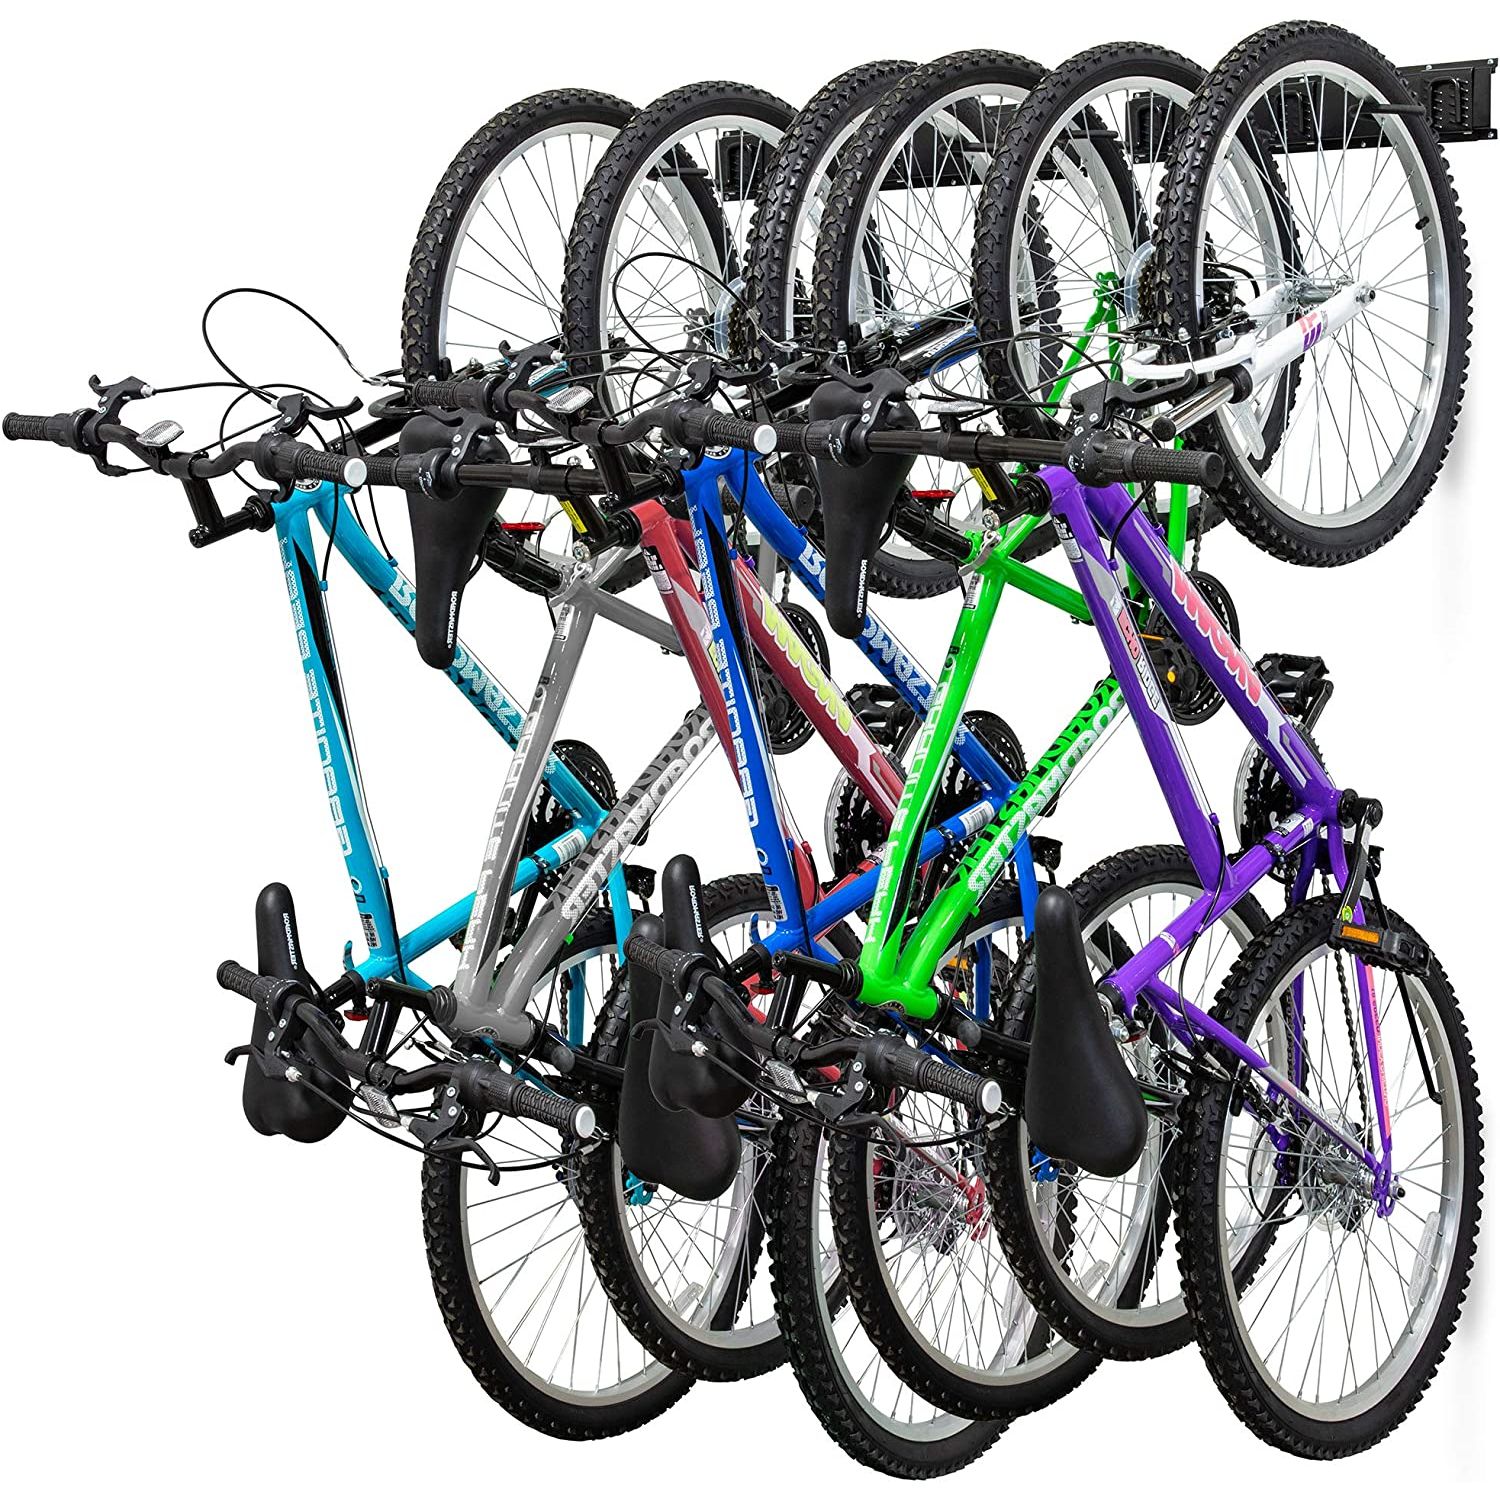 RaxGo Garage Bike Rack - Black Steel Bike Rack for 6 Bikes, Holds up to 300  lbs, Indoor Bicycle Storage Solution in the Bike Racks & Storage department  at